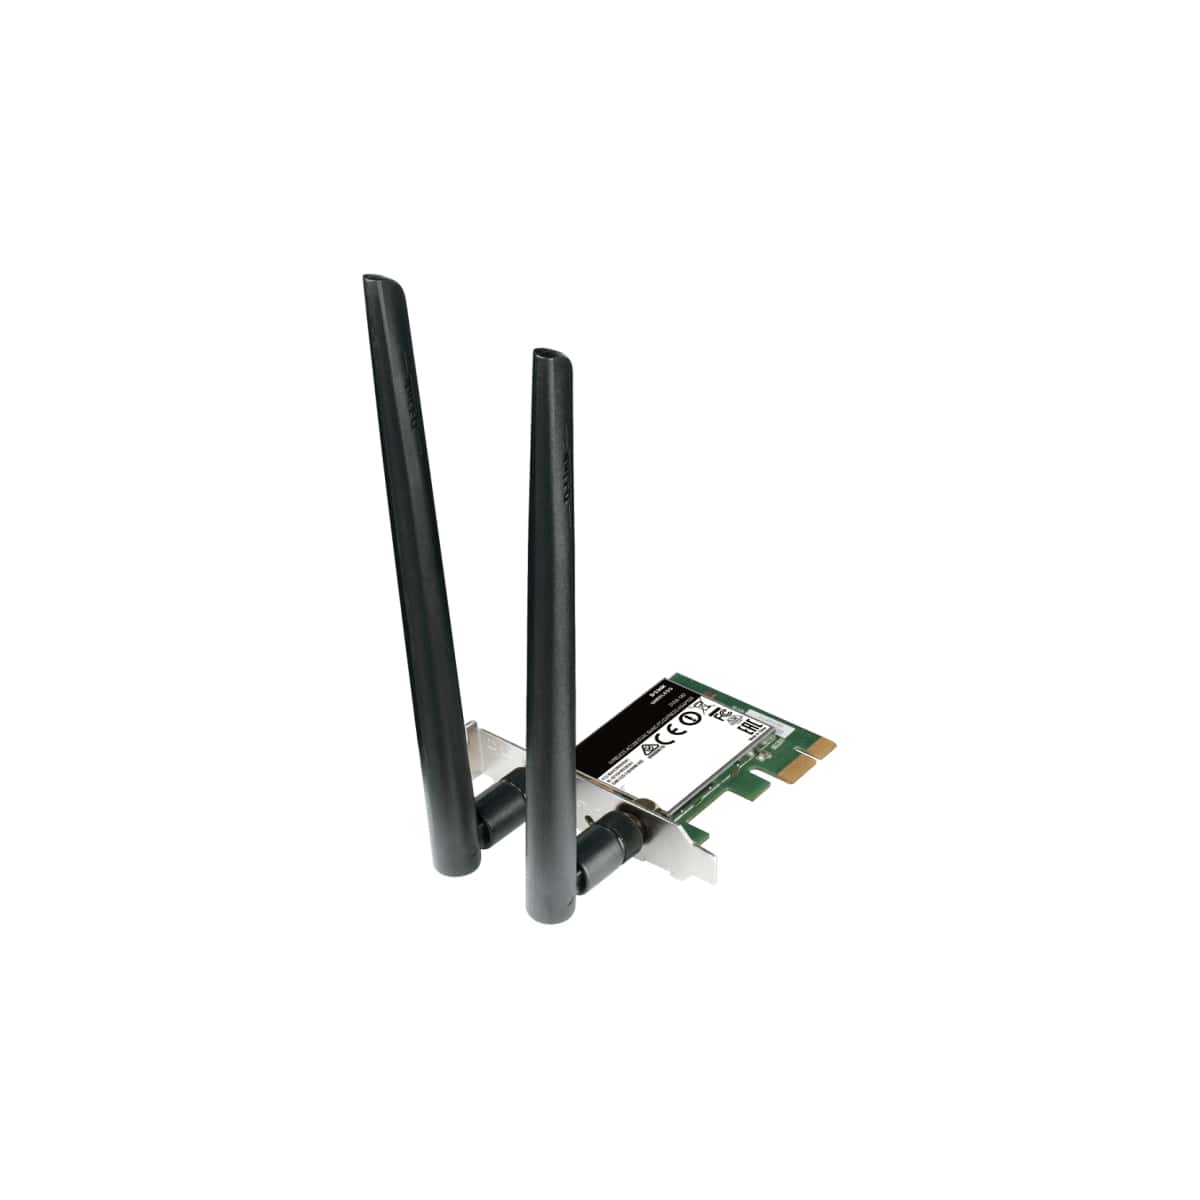 D-Link DWA-582 Wireless AC1200 Dual-Band PCI Express Adapter